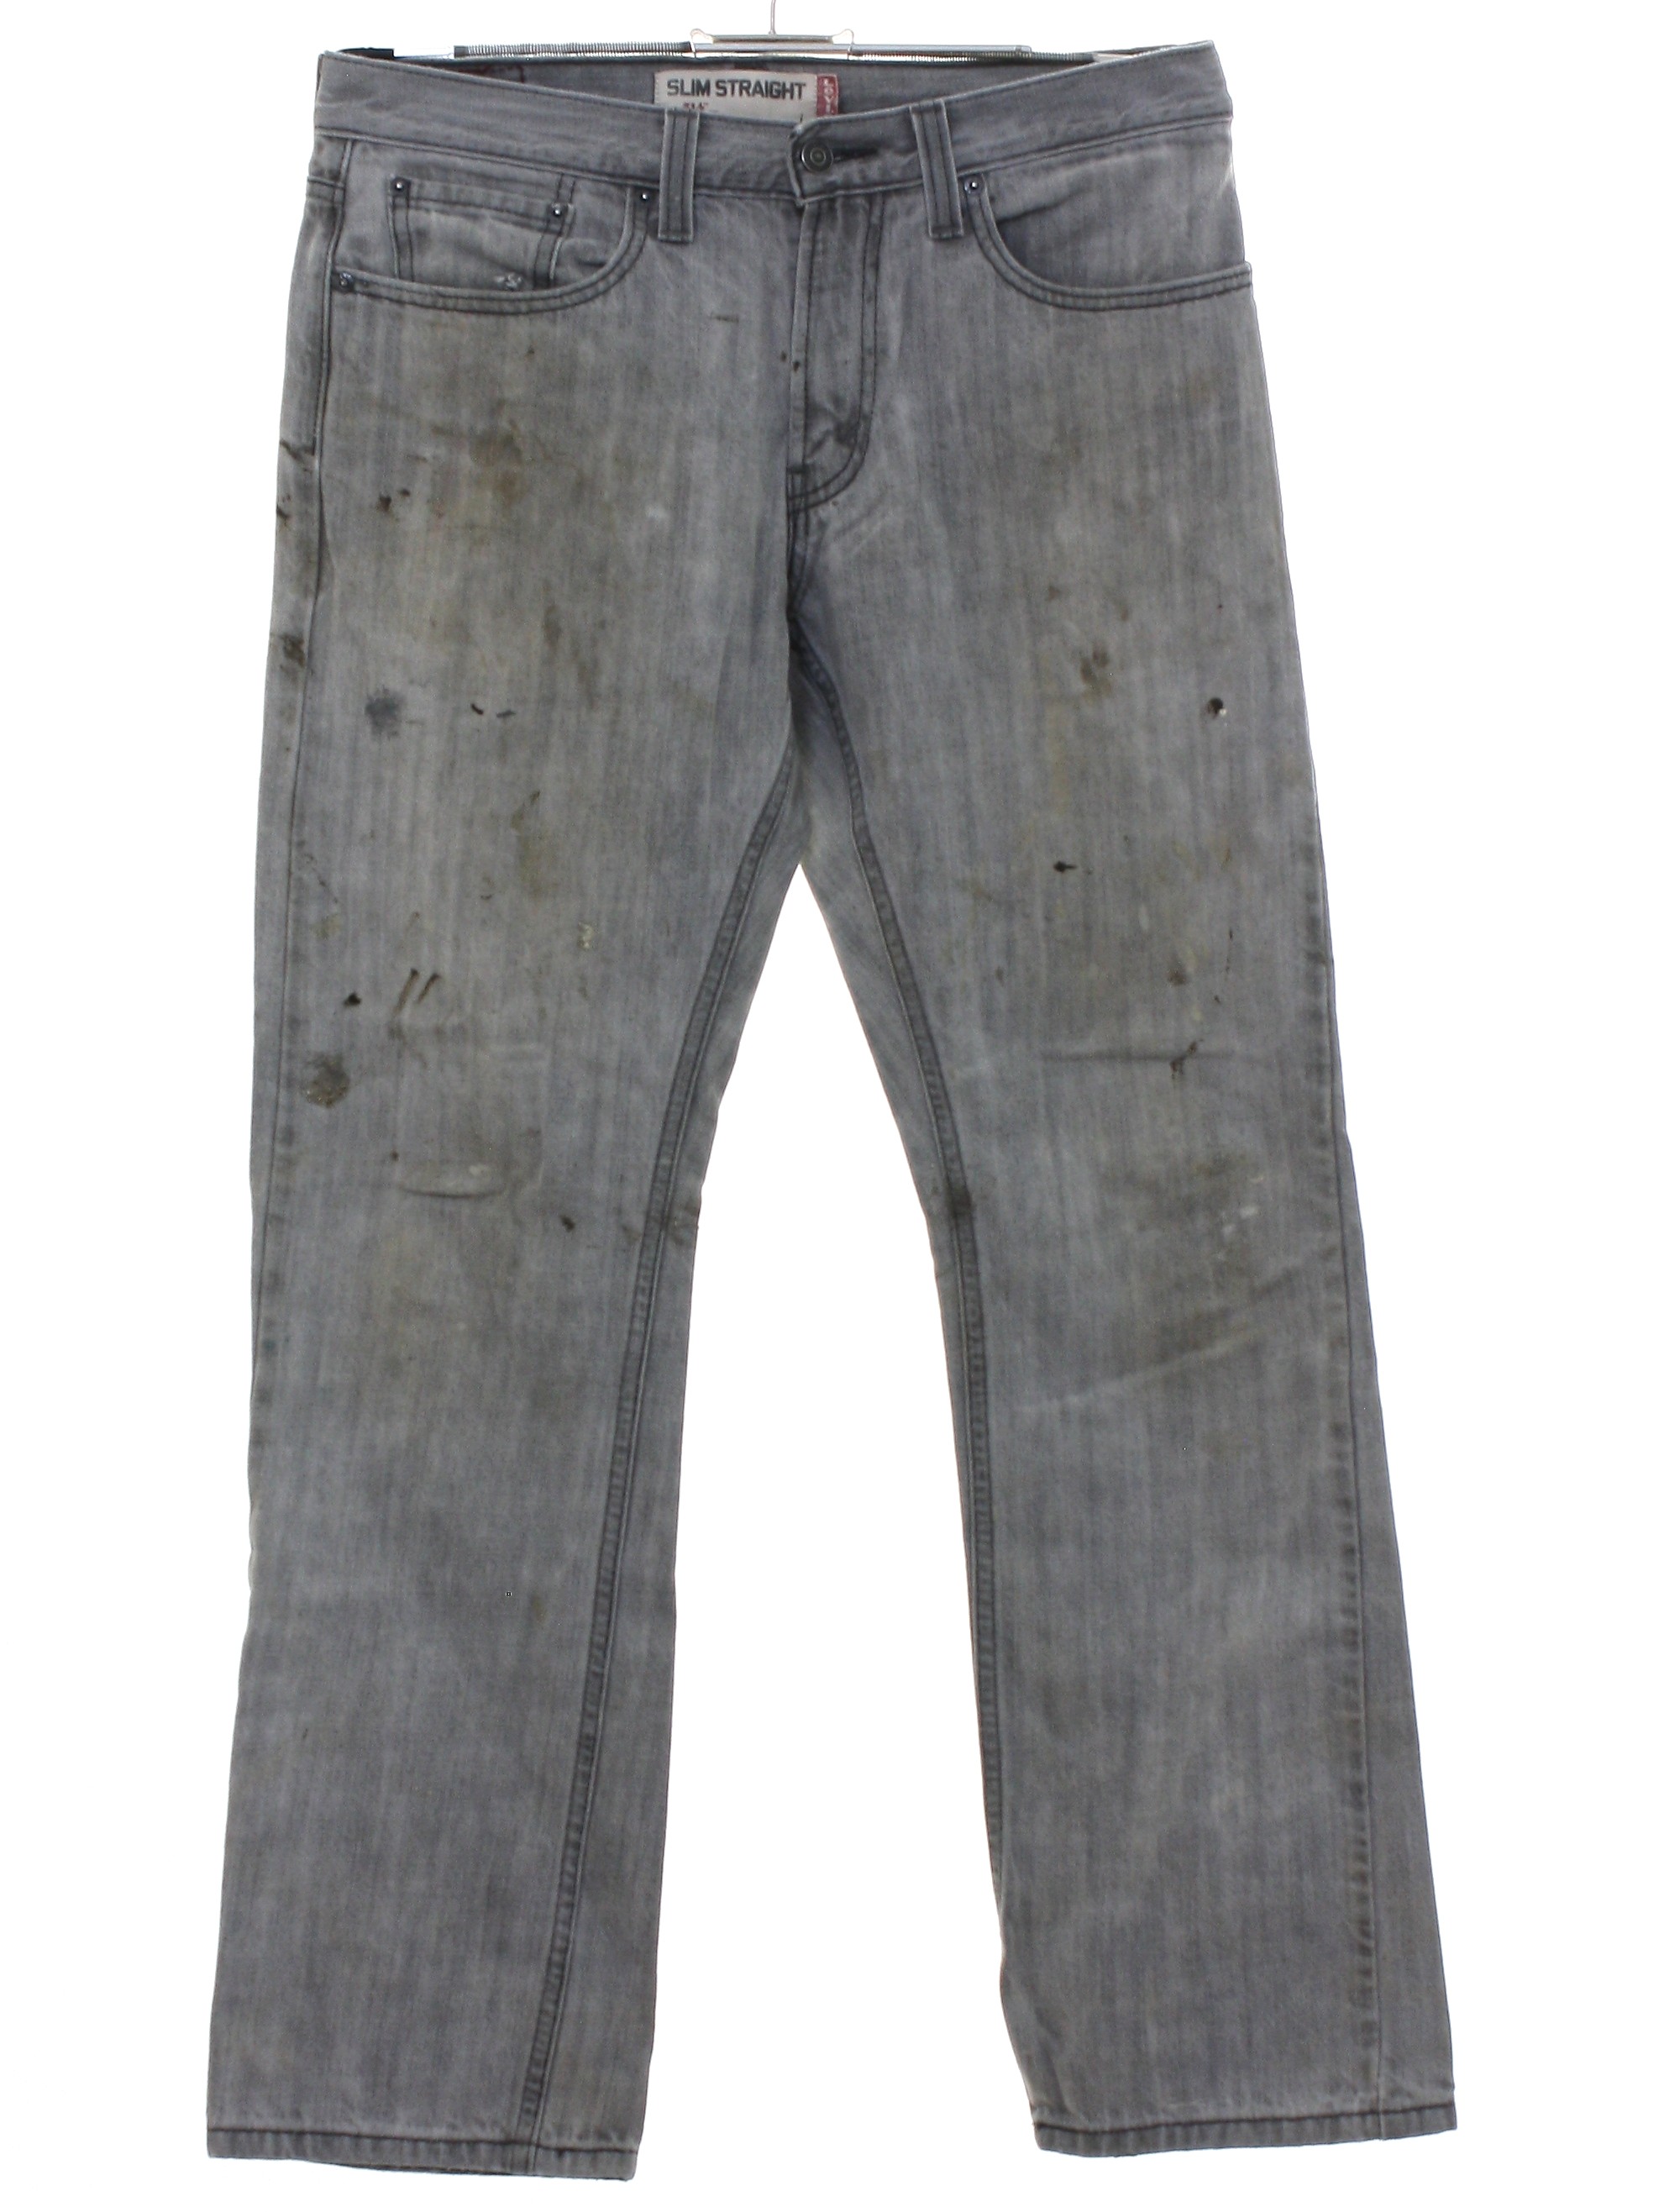 grey 514 levi jeans